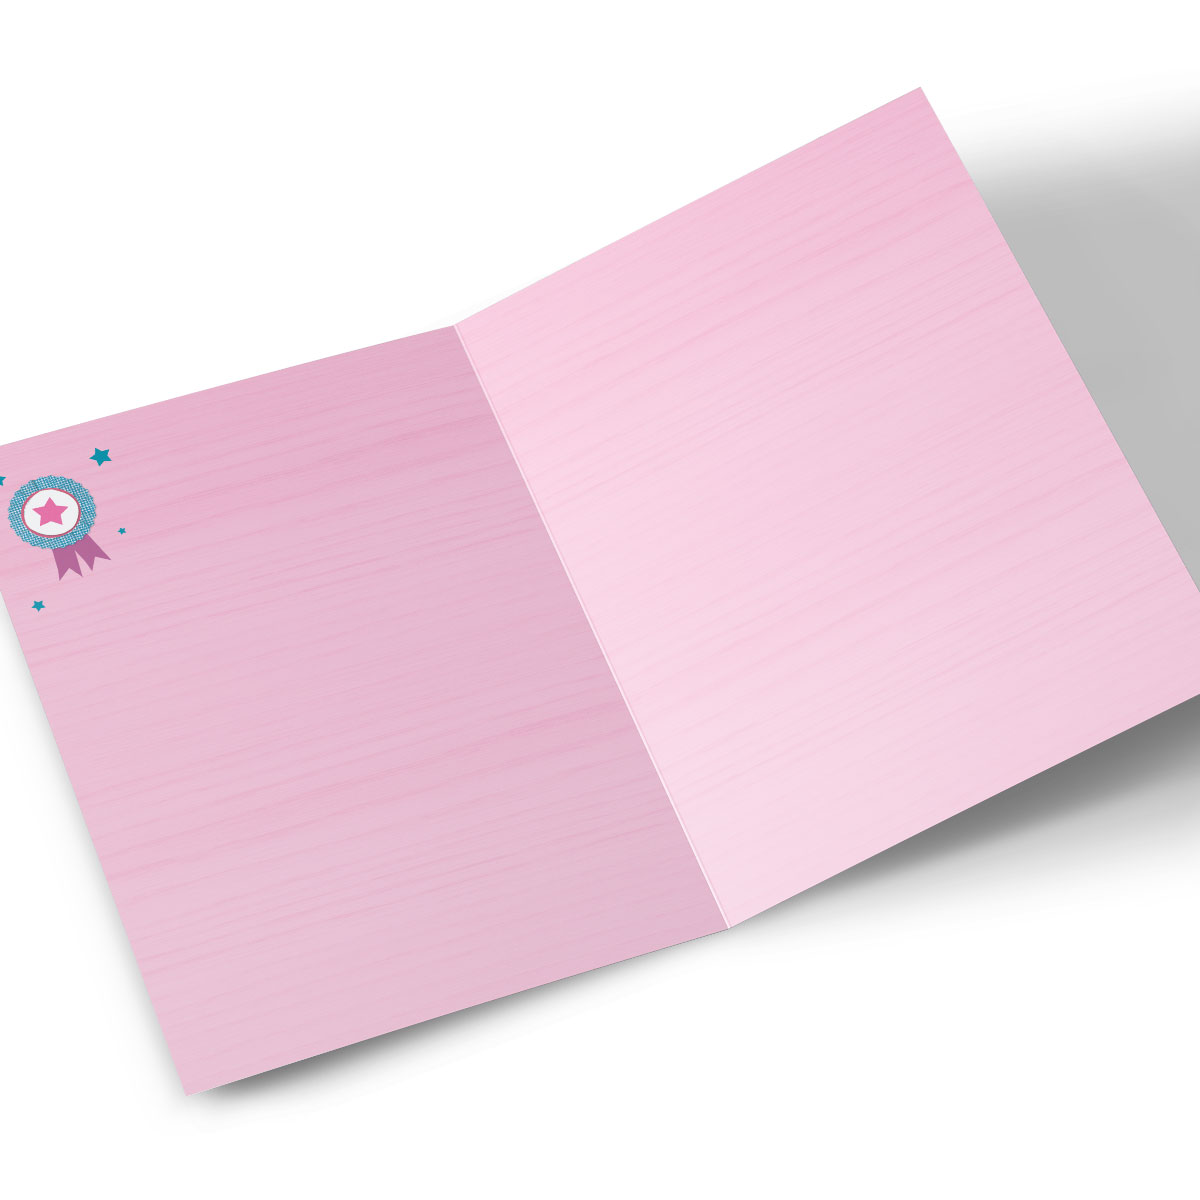 Photo Birthday Card - Pink Polaroids, Daughter